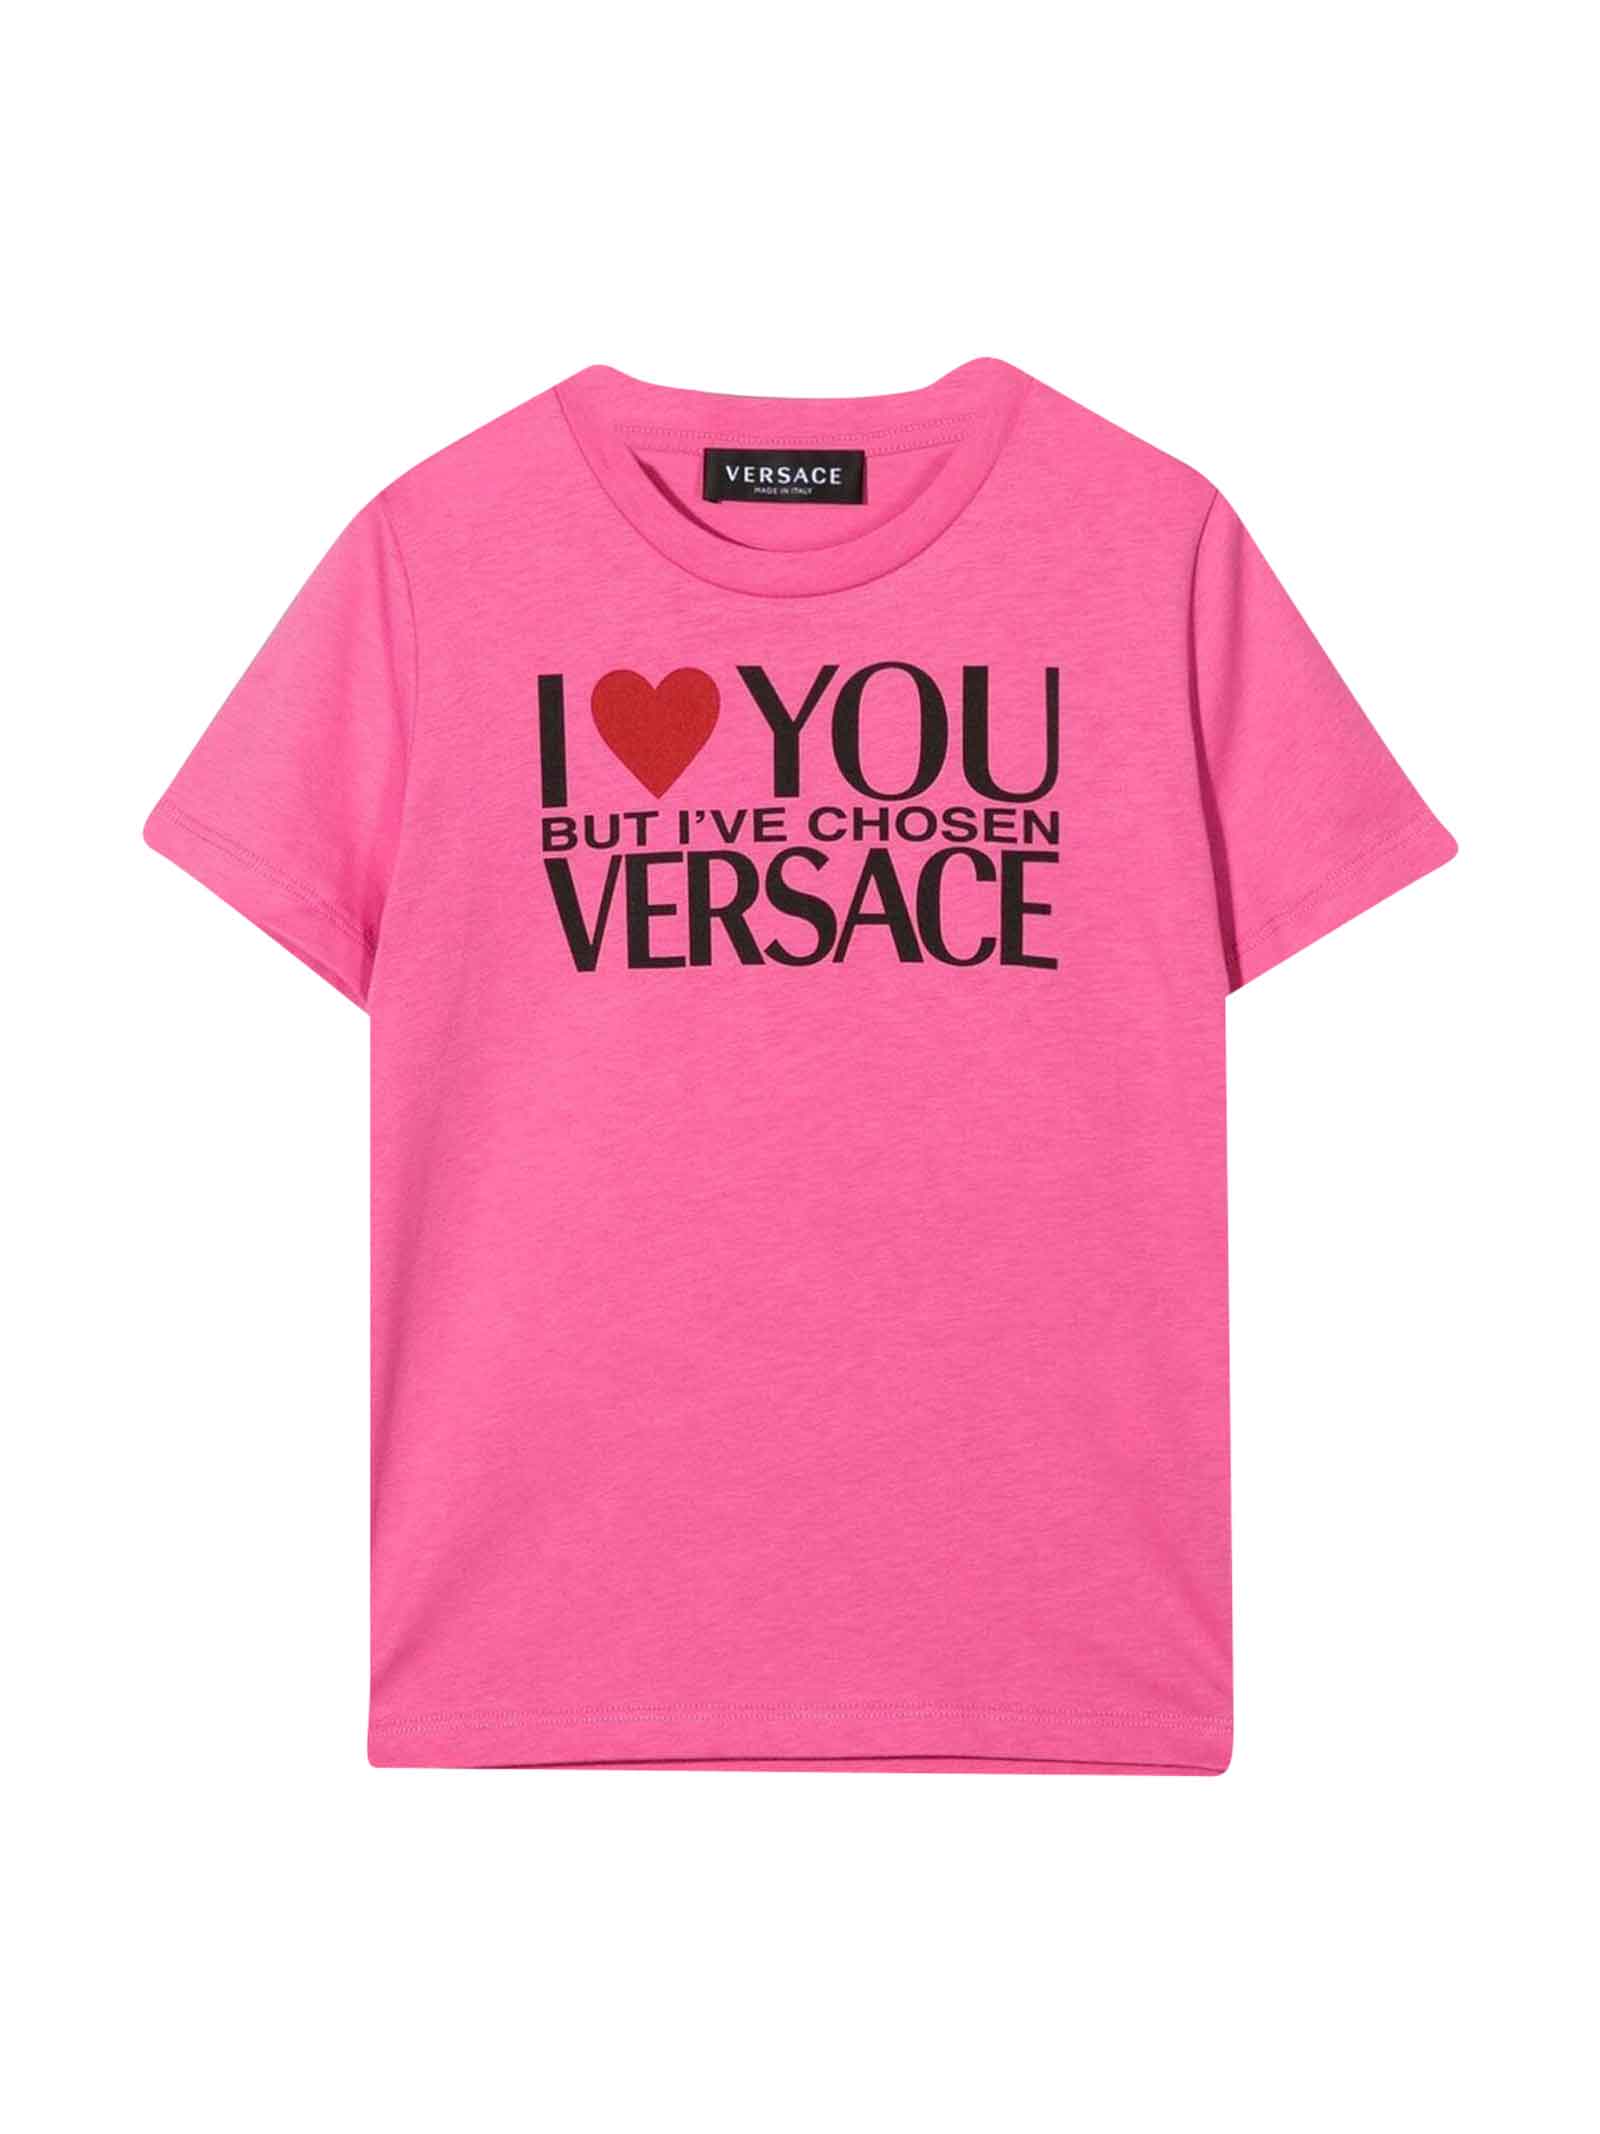 Versace Fuchsia T-shirt Unisex Kids